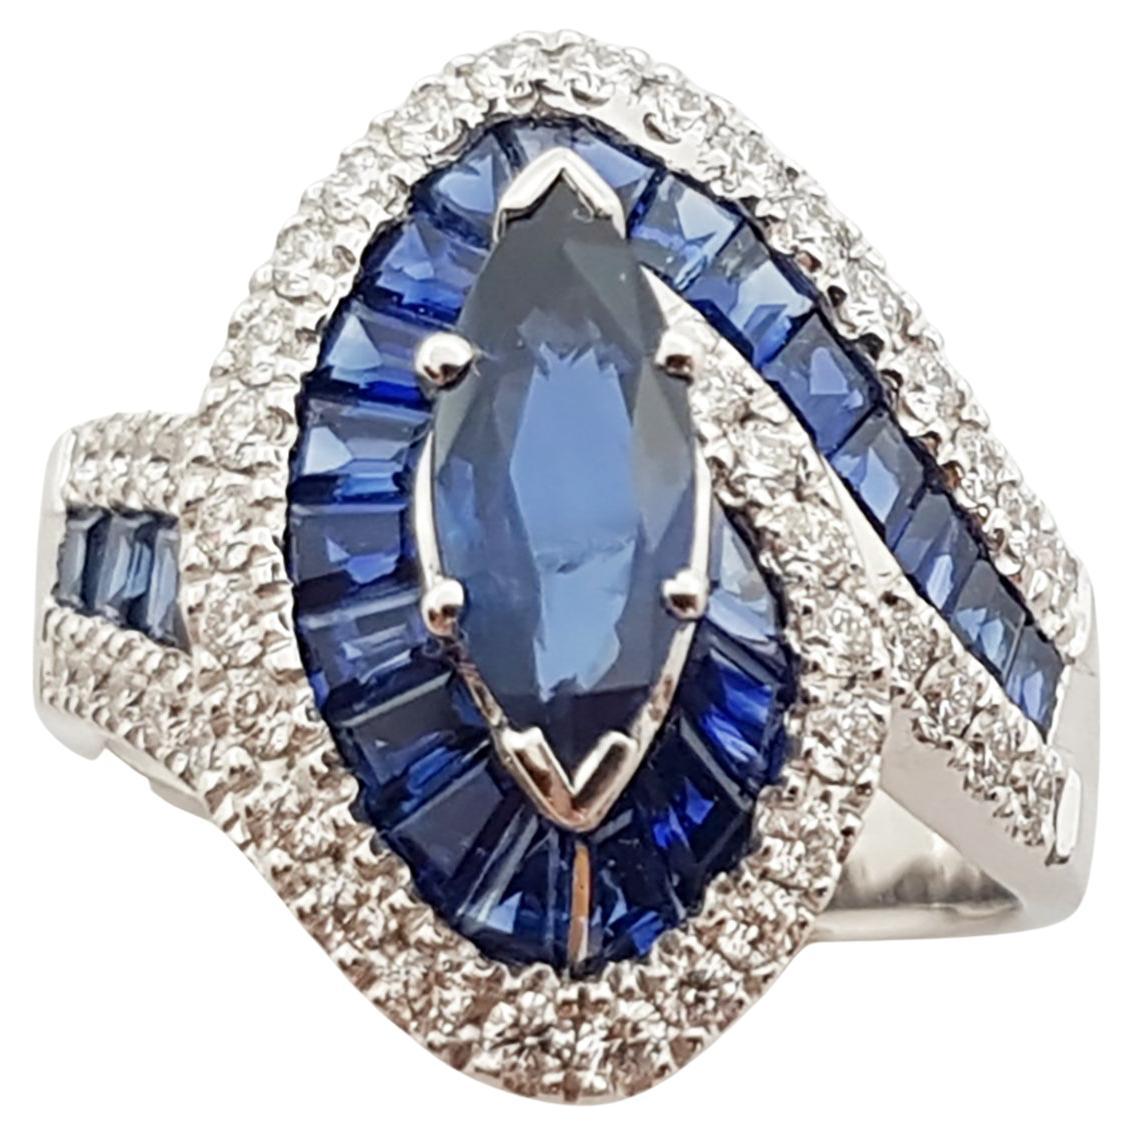 Blue Sapphire and Diamond Ring Set in 18 Karat White Gold Settings